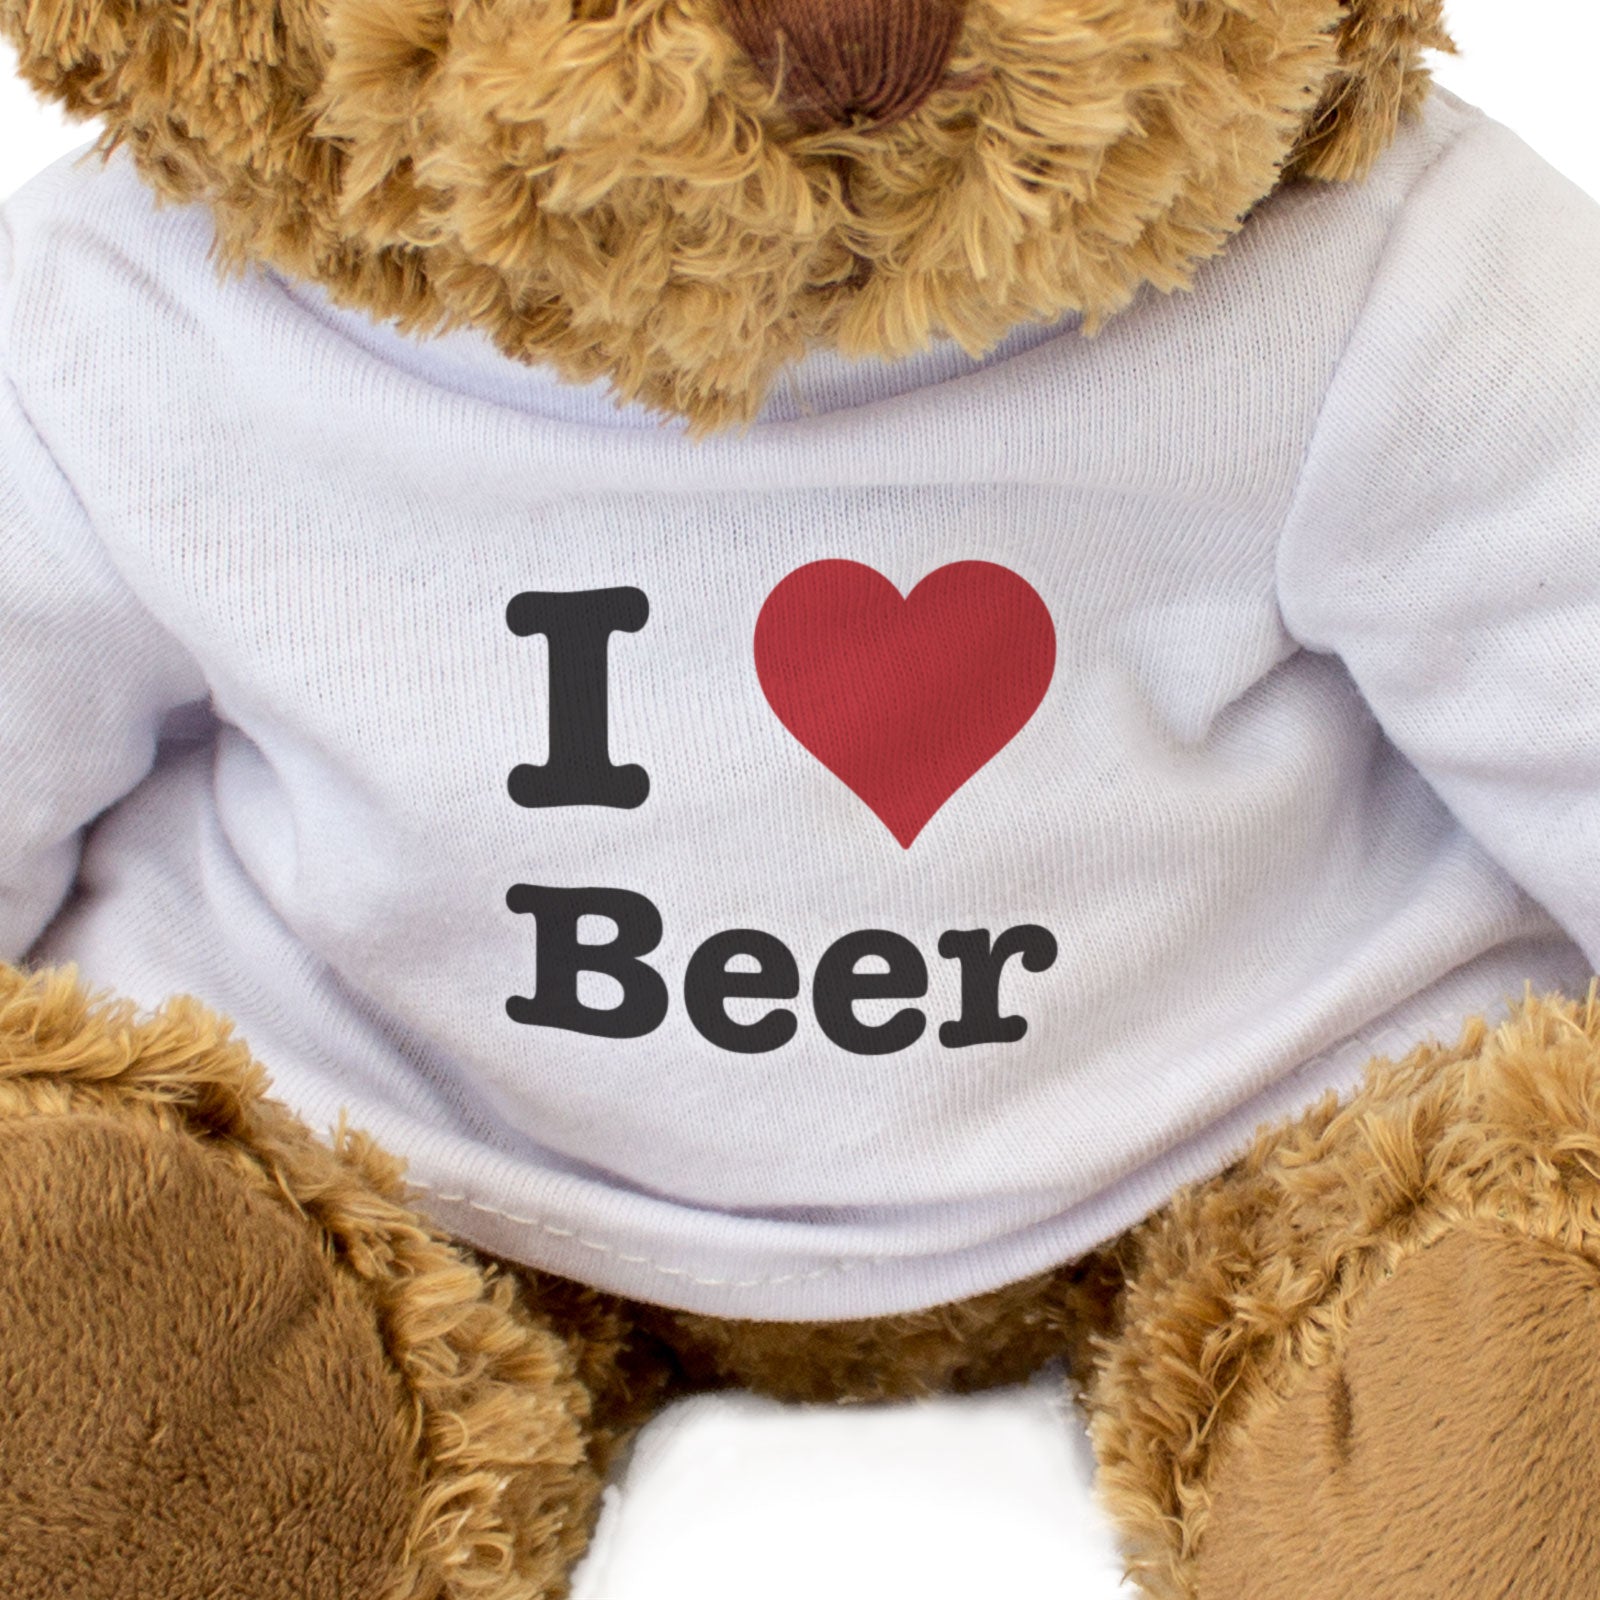 I Love Beer Teddy Bear Gift for Beer Lovers